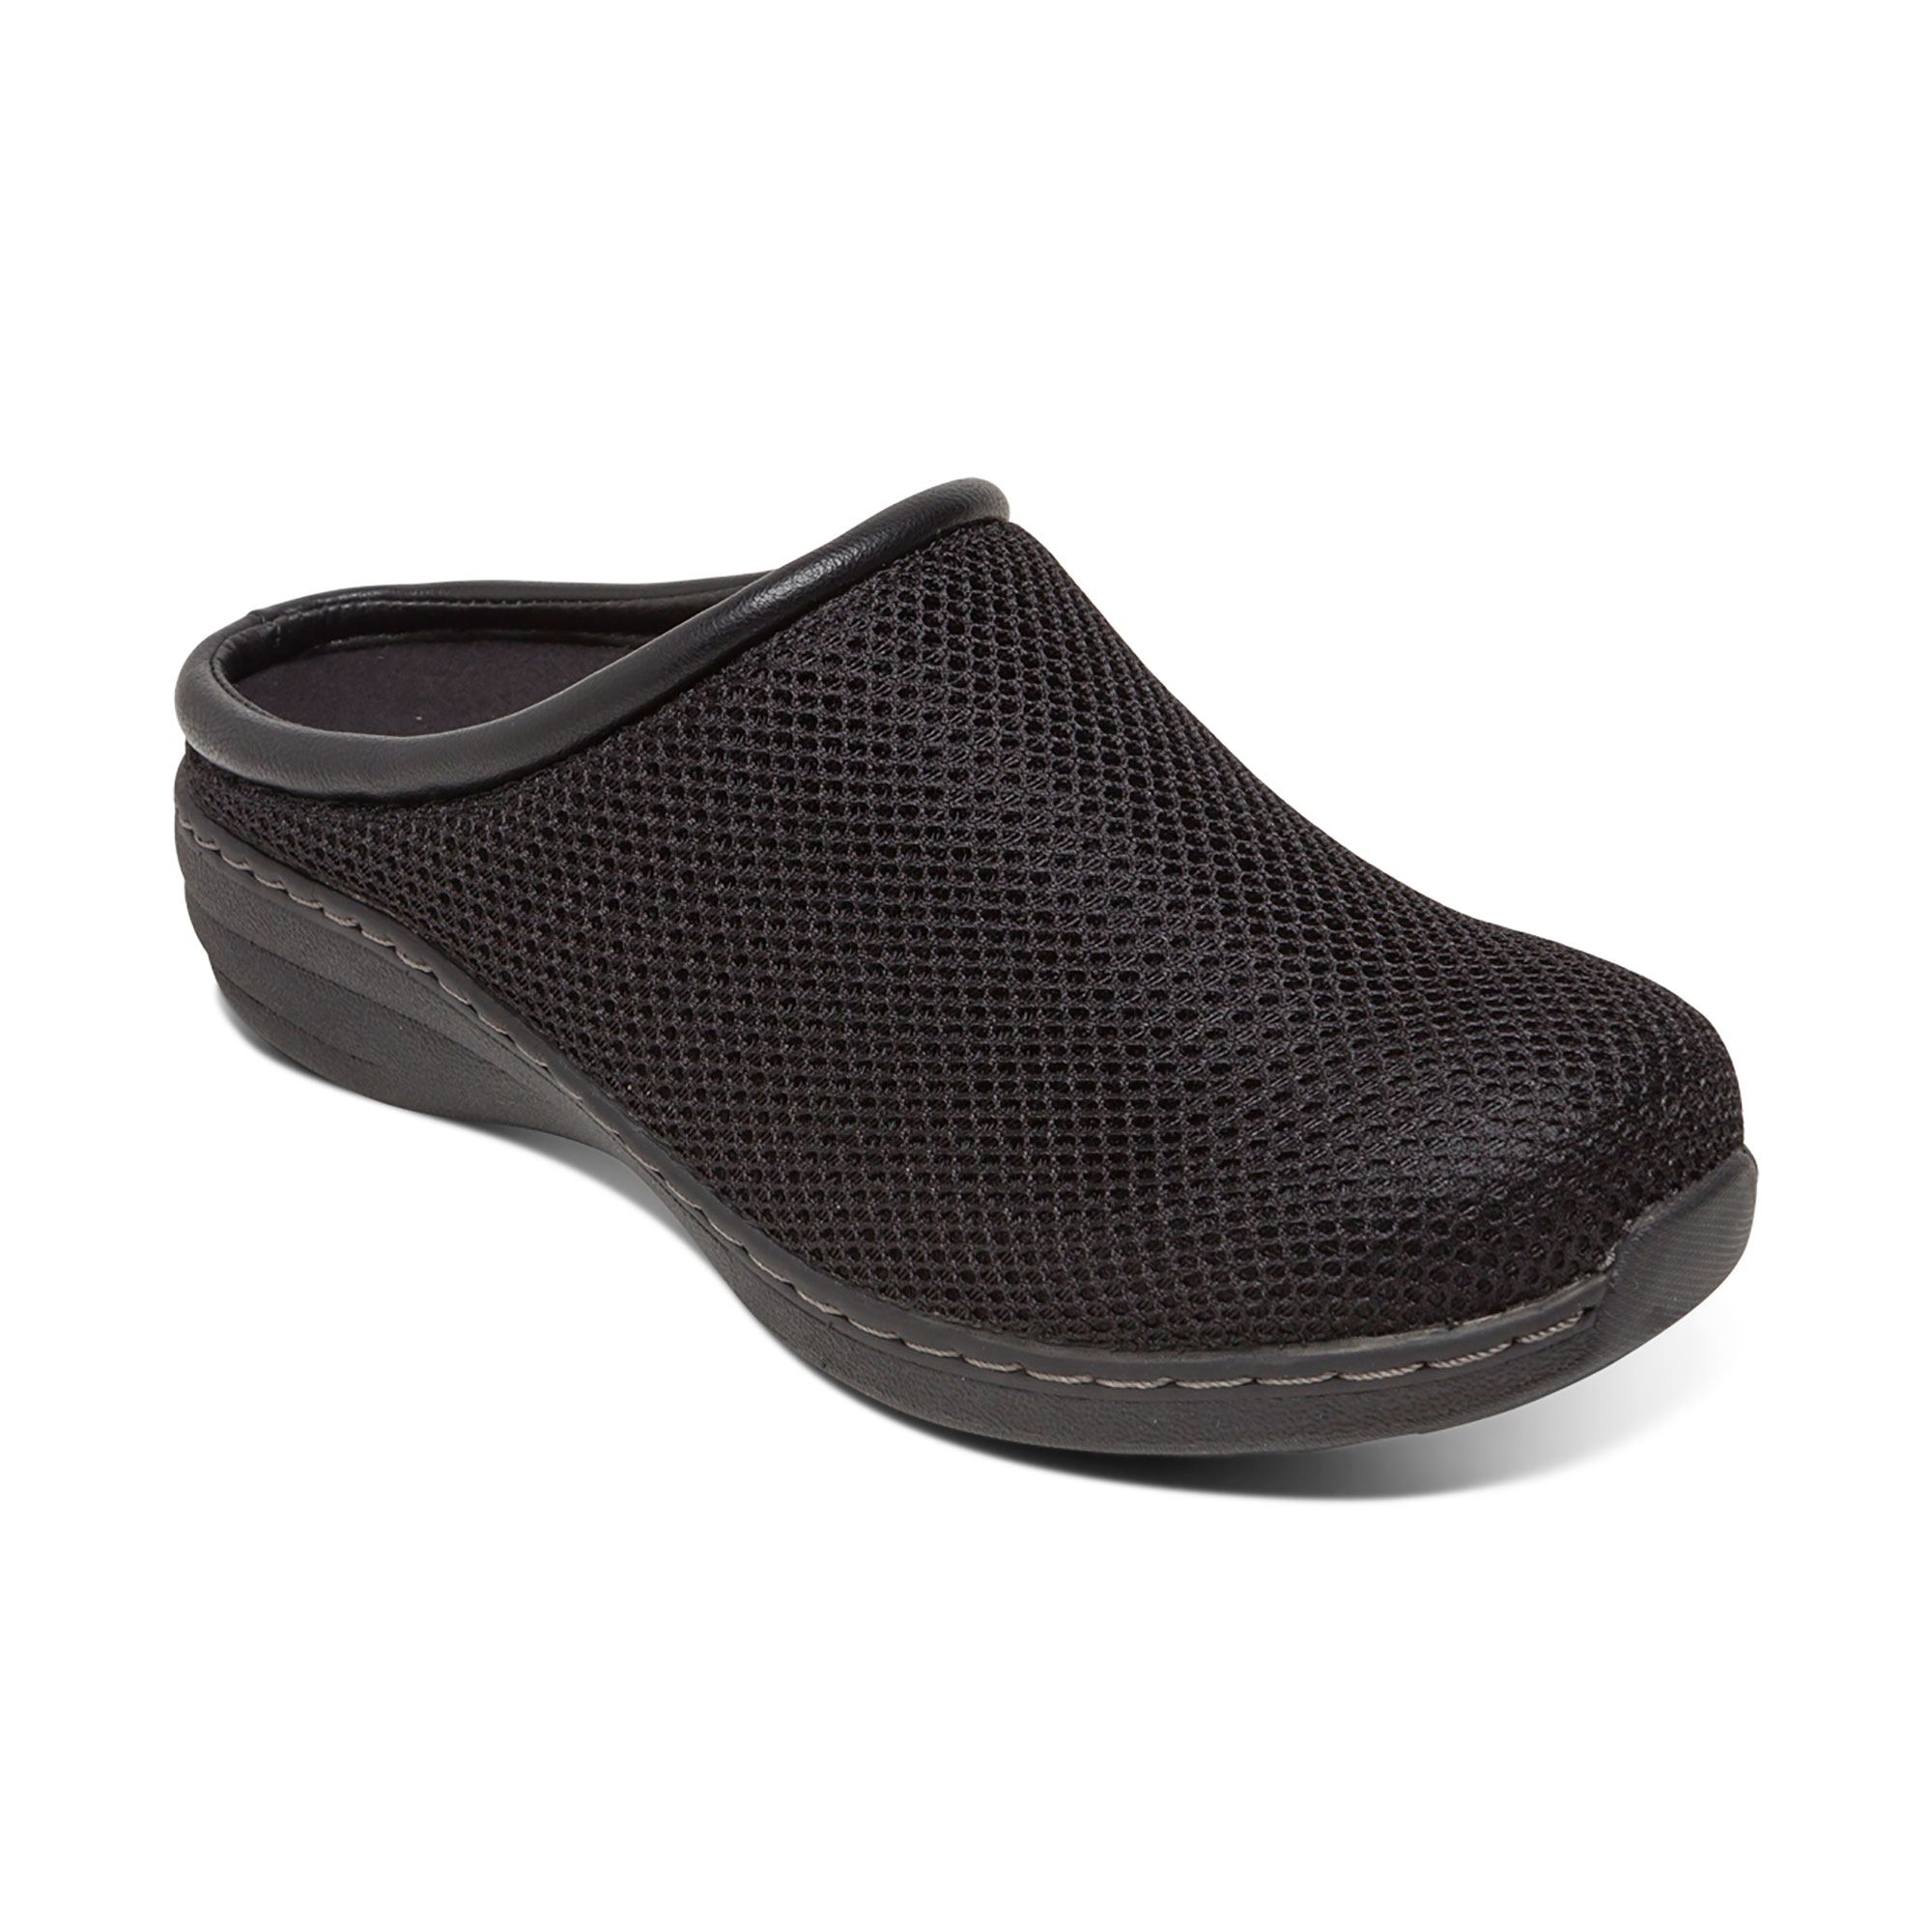 slip resistant clog shoes